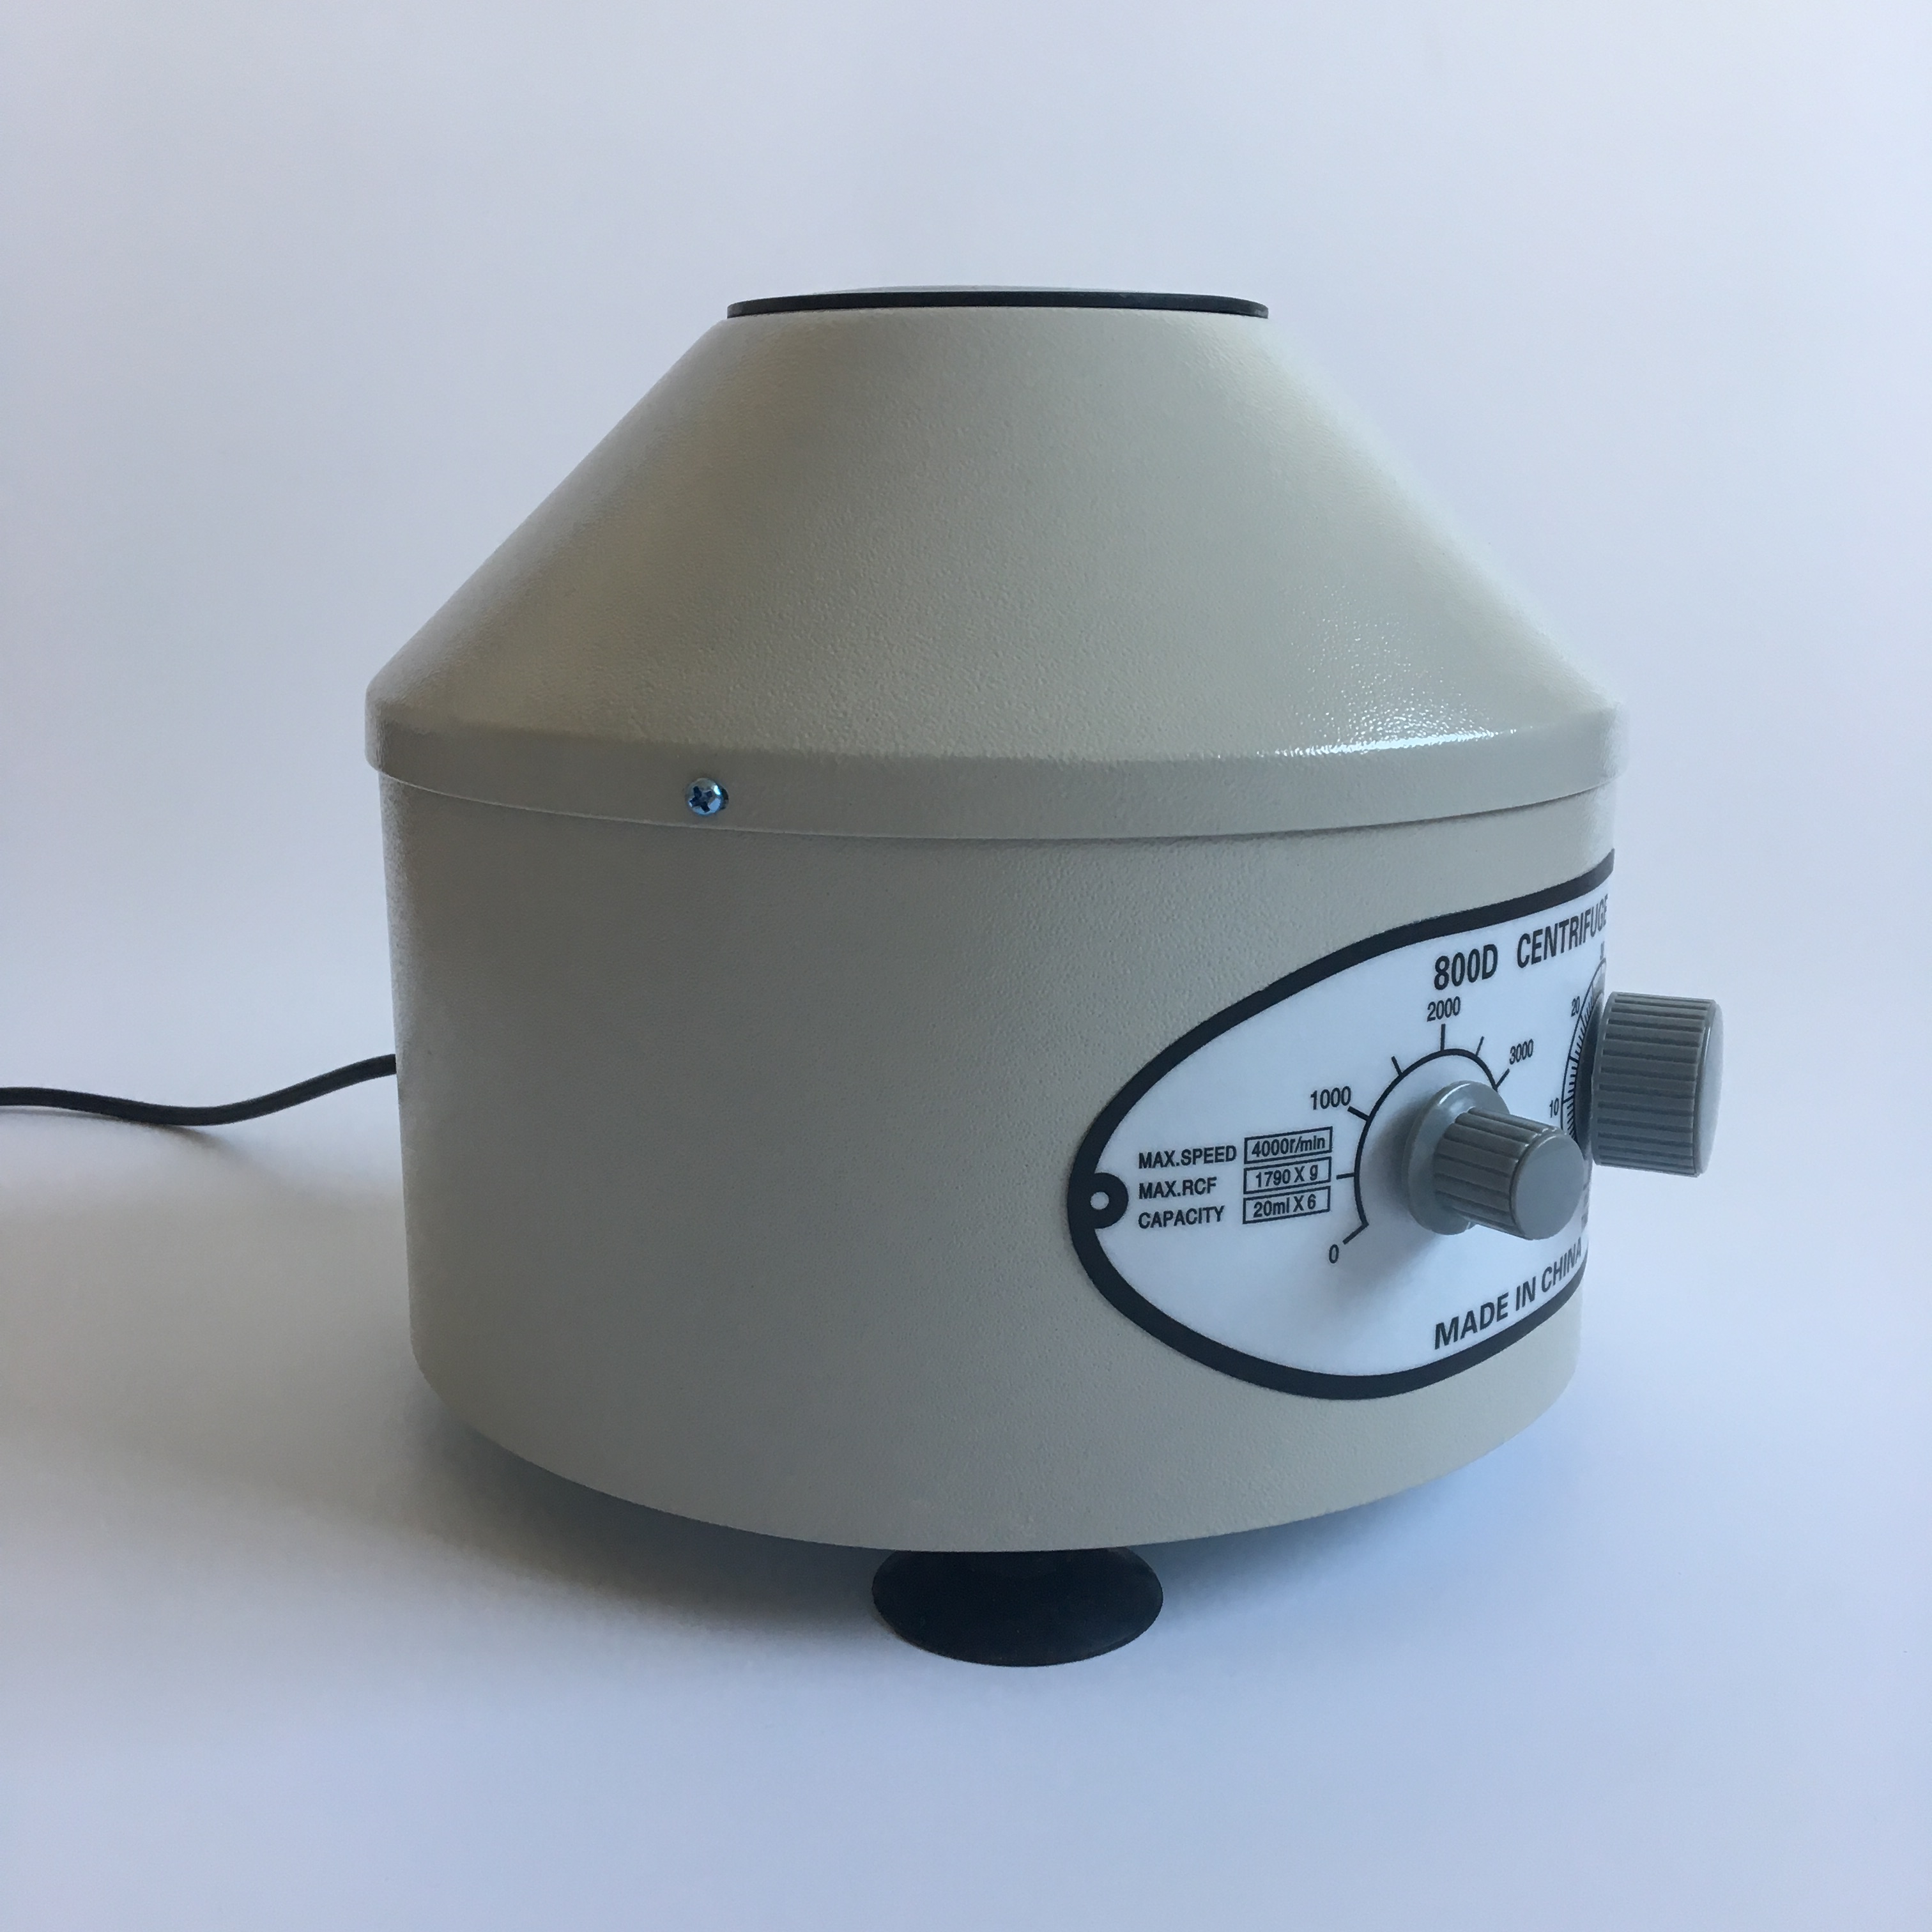 Wholesale Discount 10 Miu/ml Pregnancy Rapid Test -  lab device mini 800D centrifuge machine with timer – Baysen